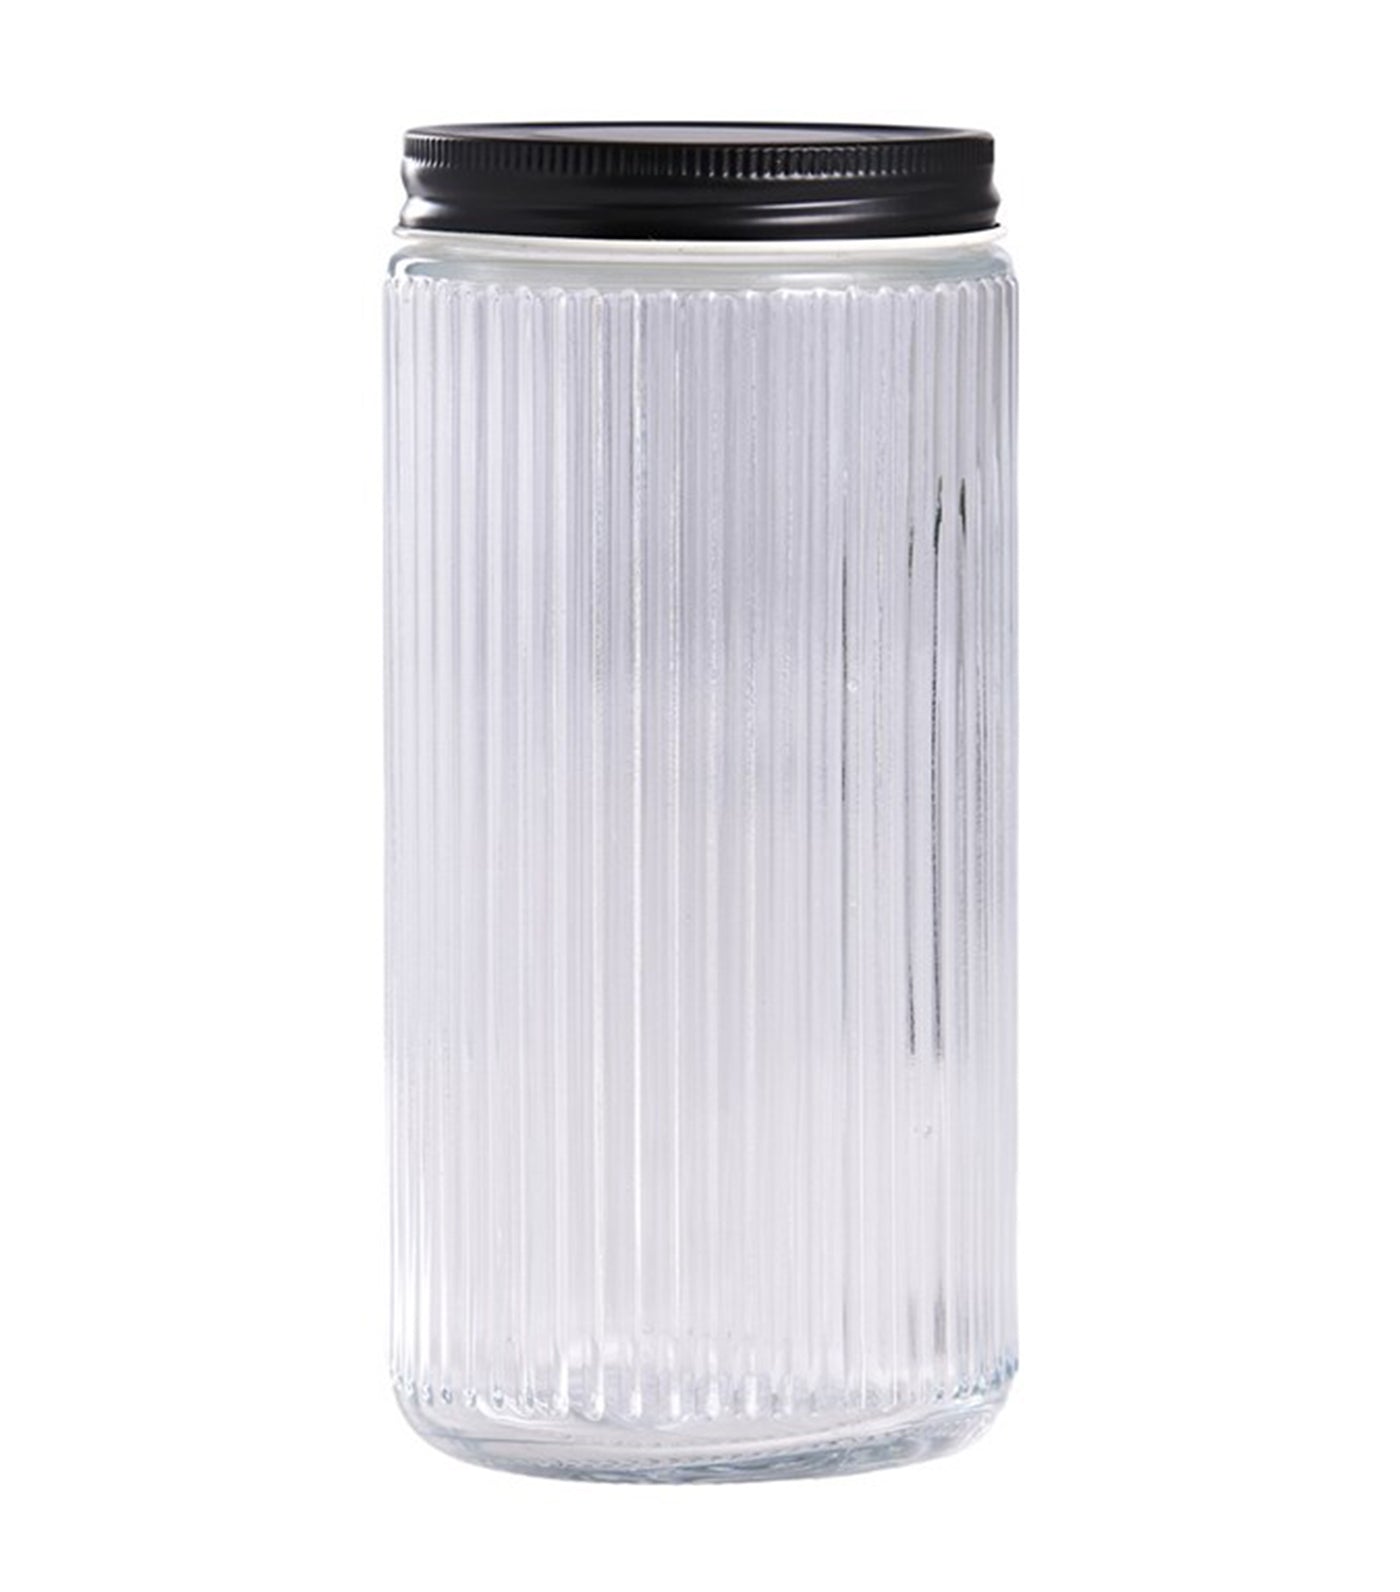 MakeRoom Storage Jar With Screw Lid